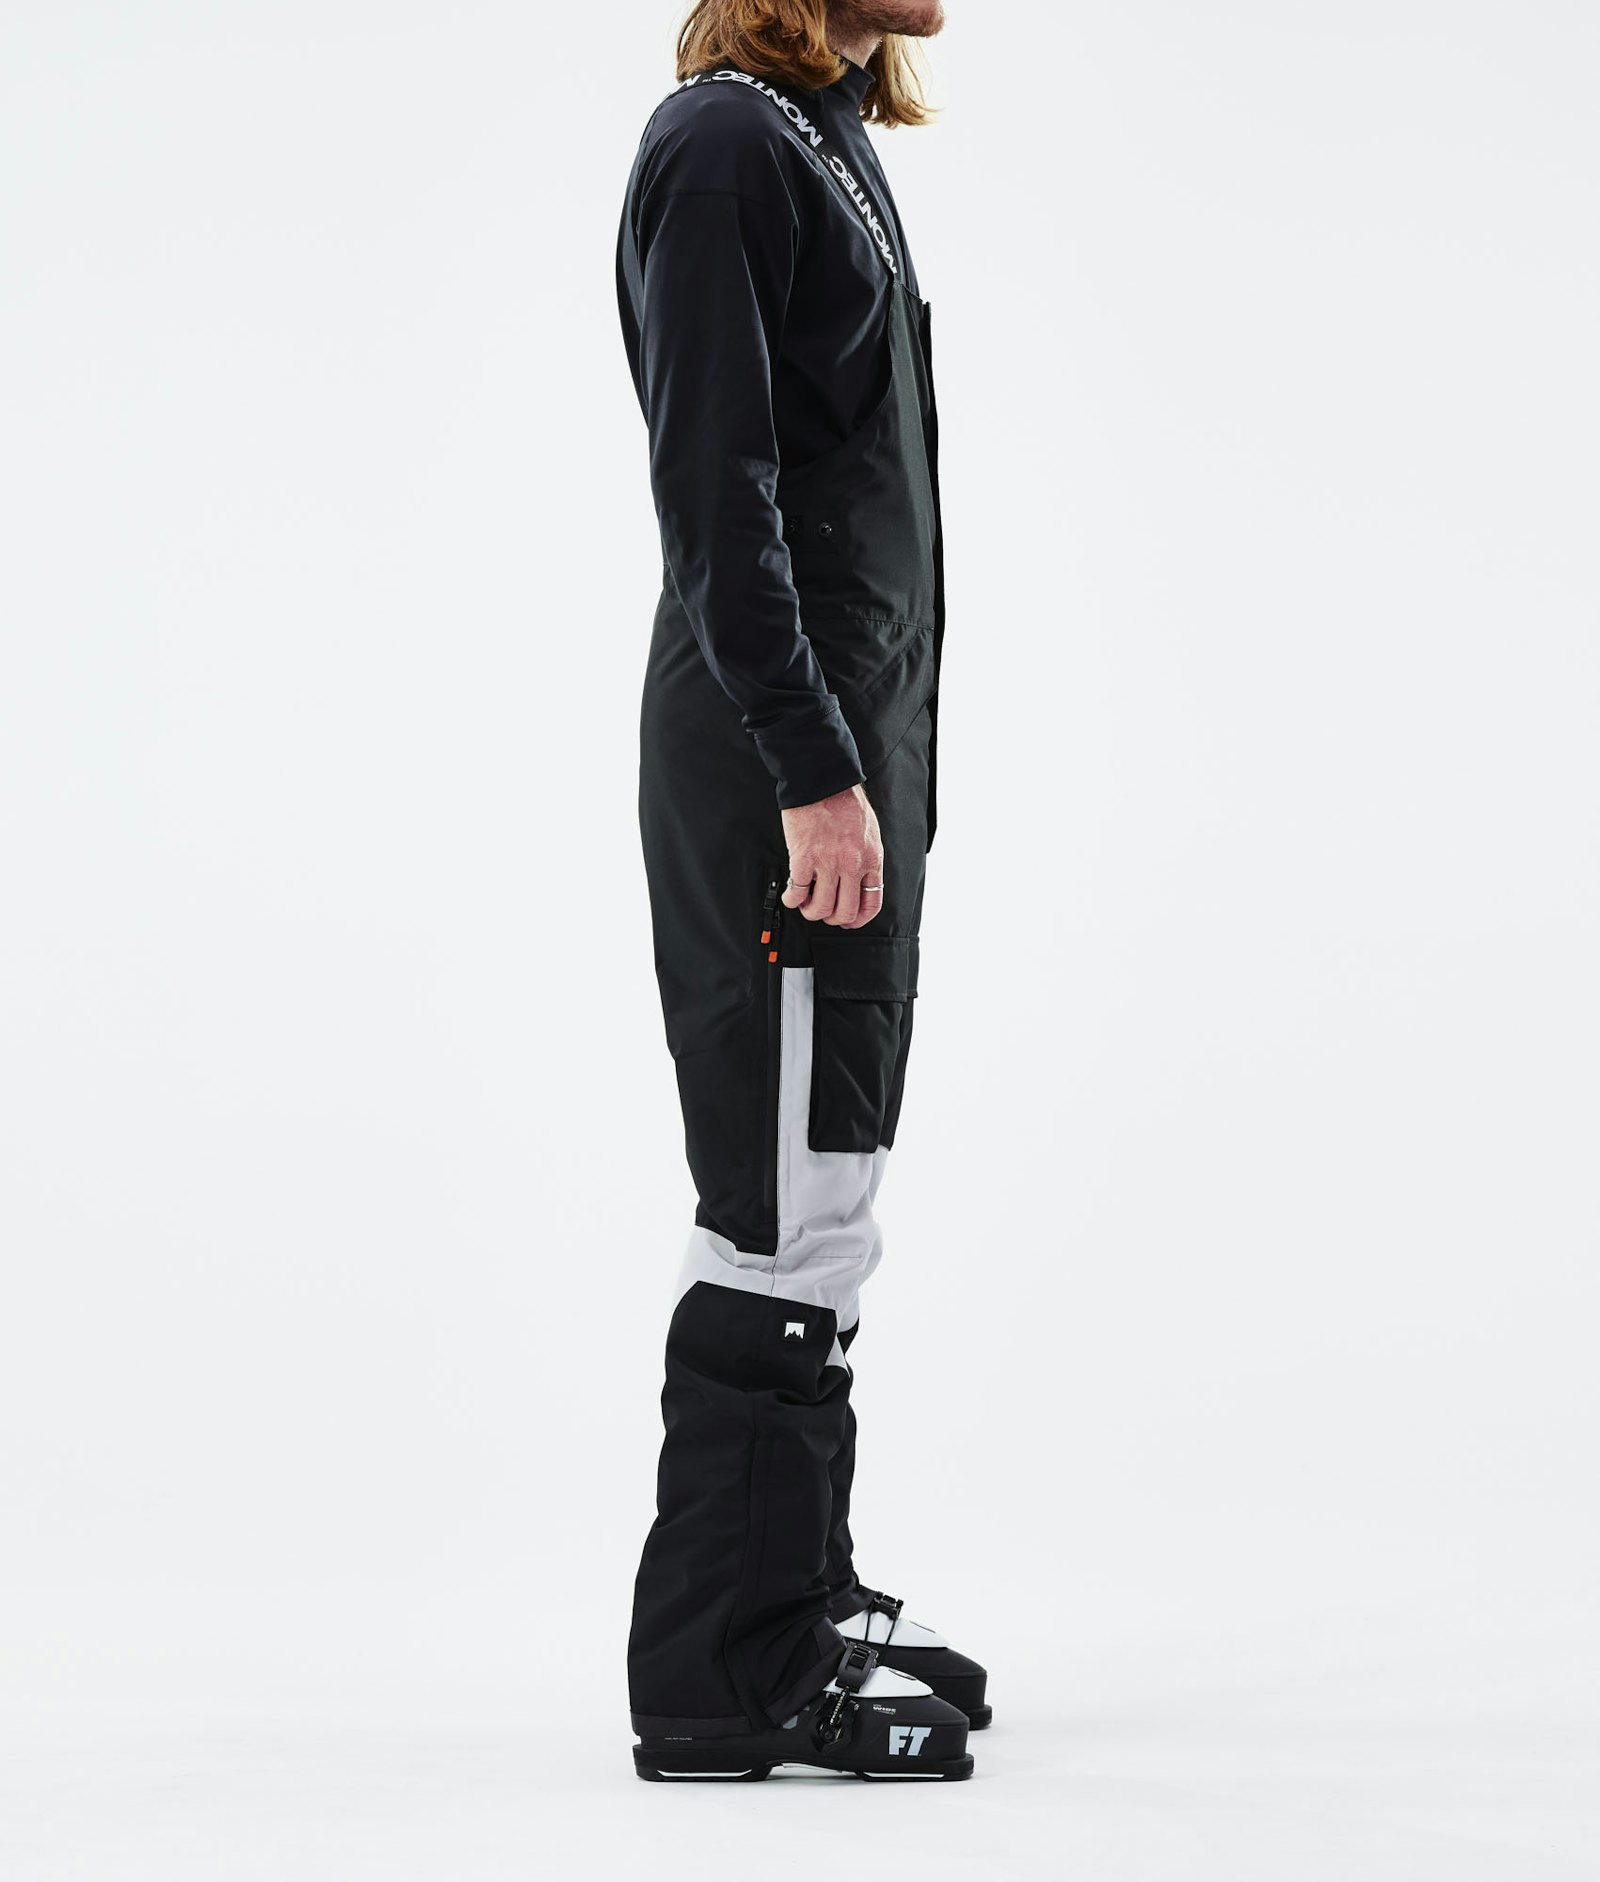 Fawk 2021 Ski Pants Men Black/Light Grey/Black, Image 2 of 6